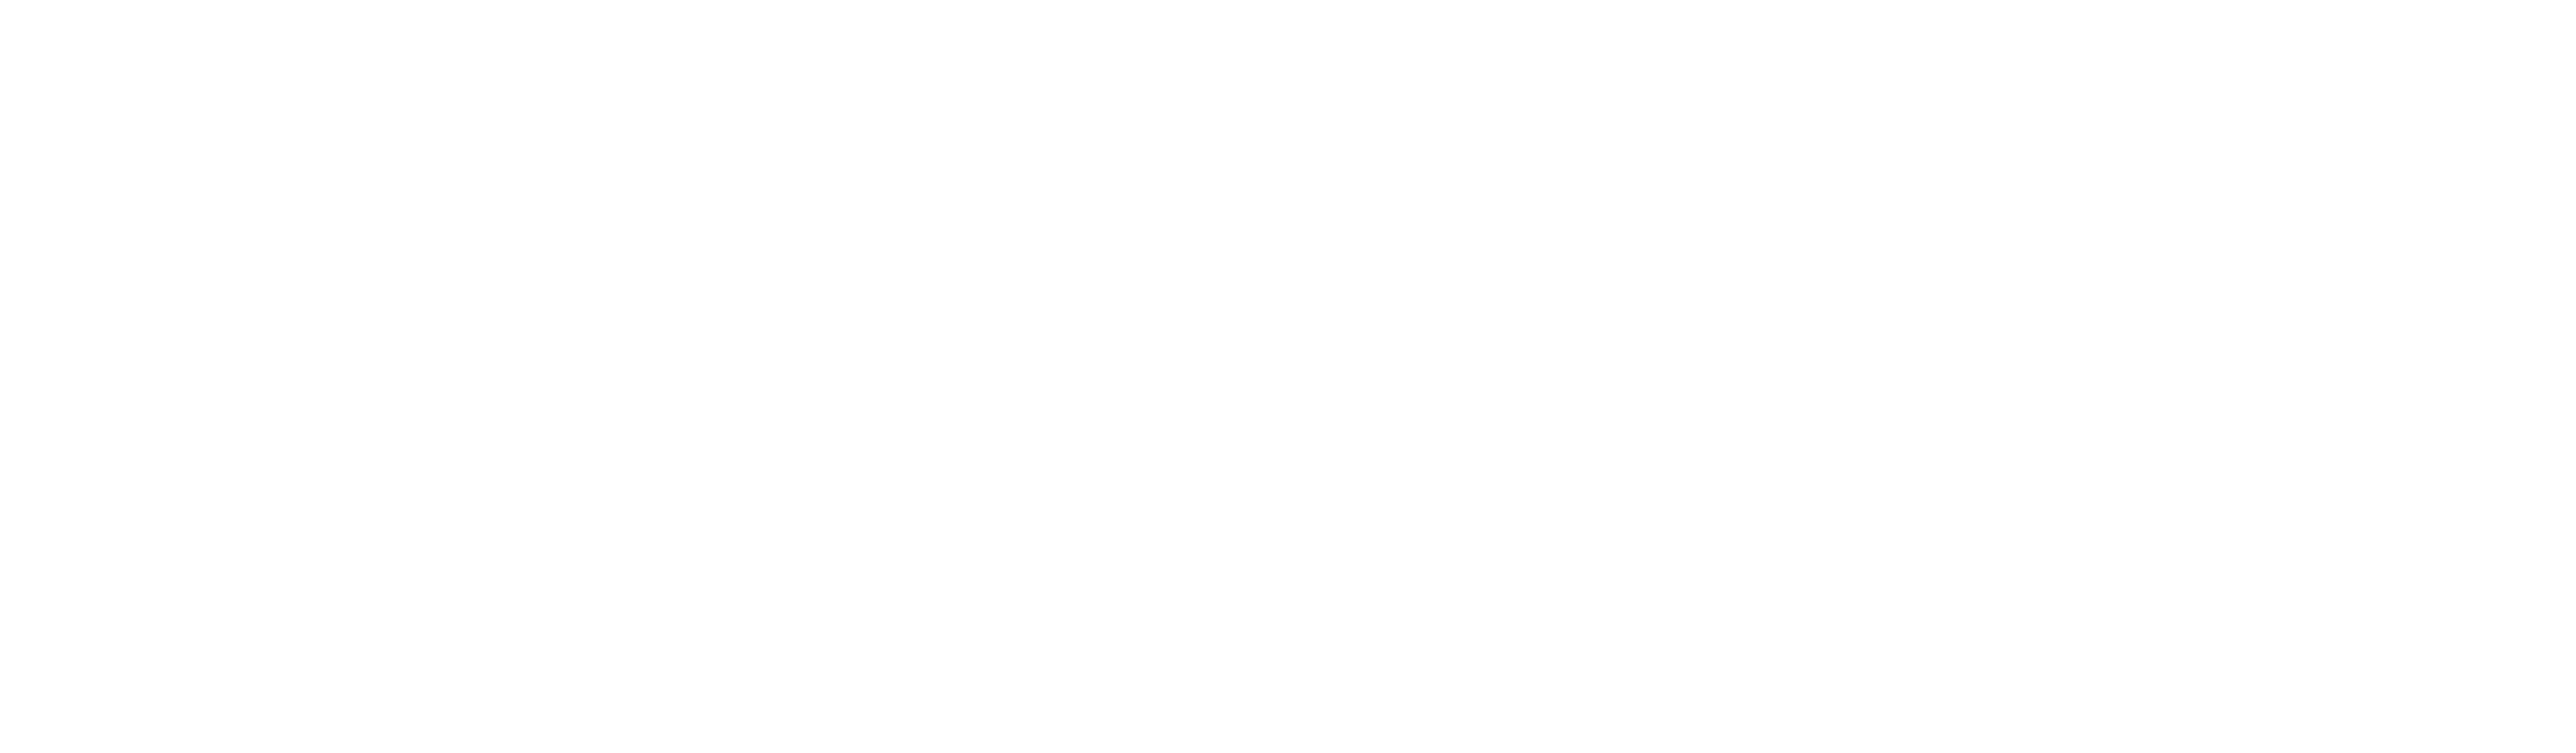 Forté Pharma Chrome 100 30 pc(s) - Redcare Pharmacie